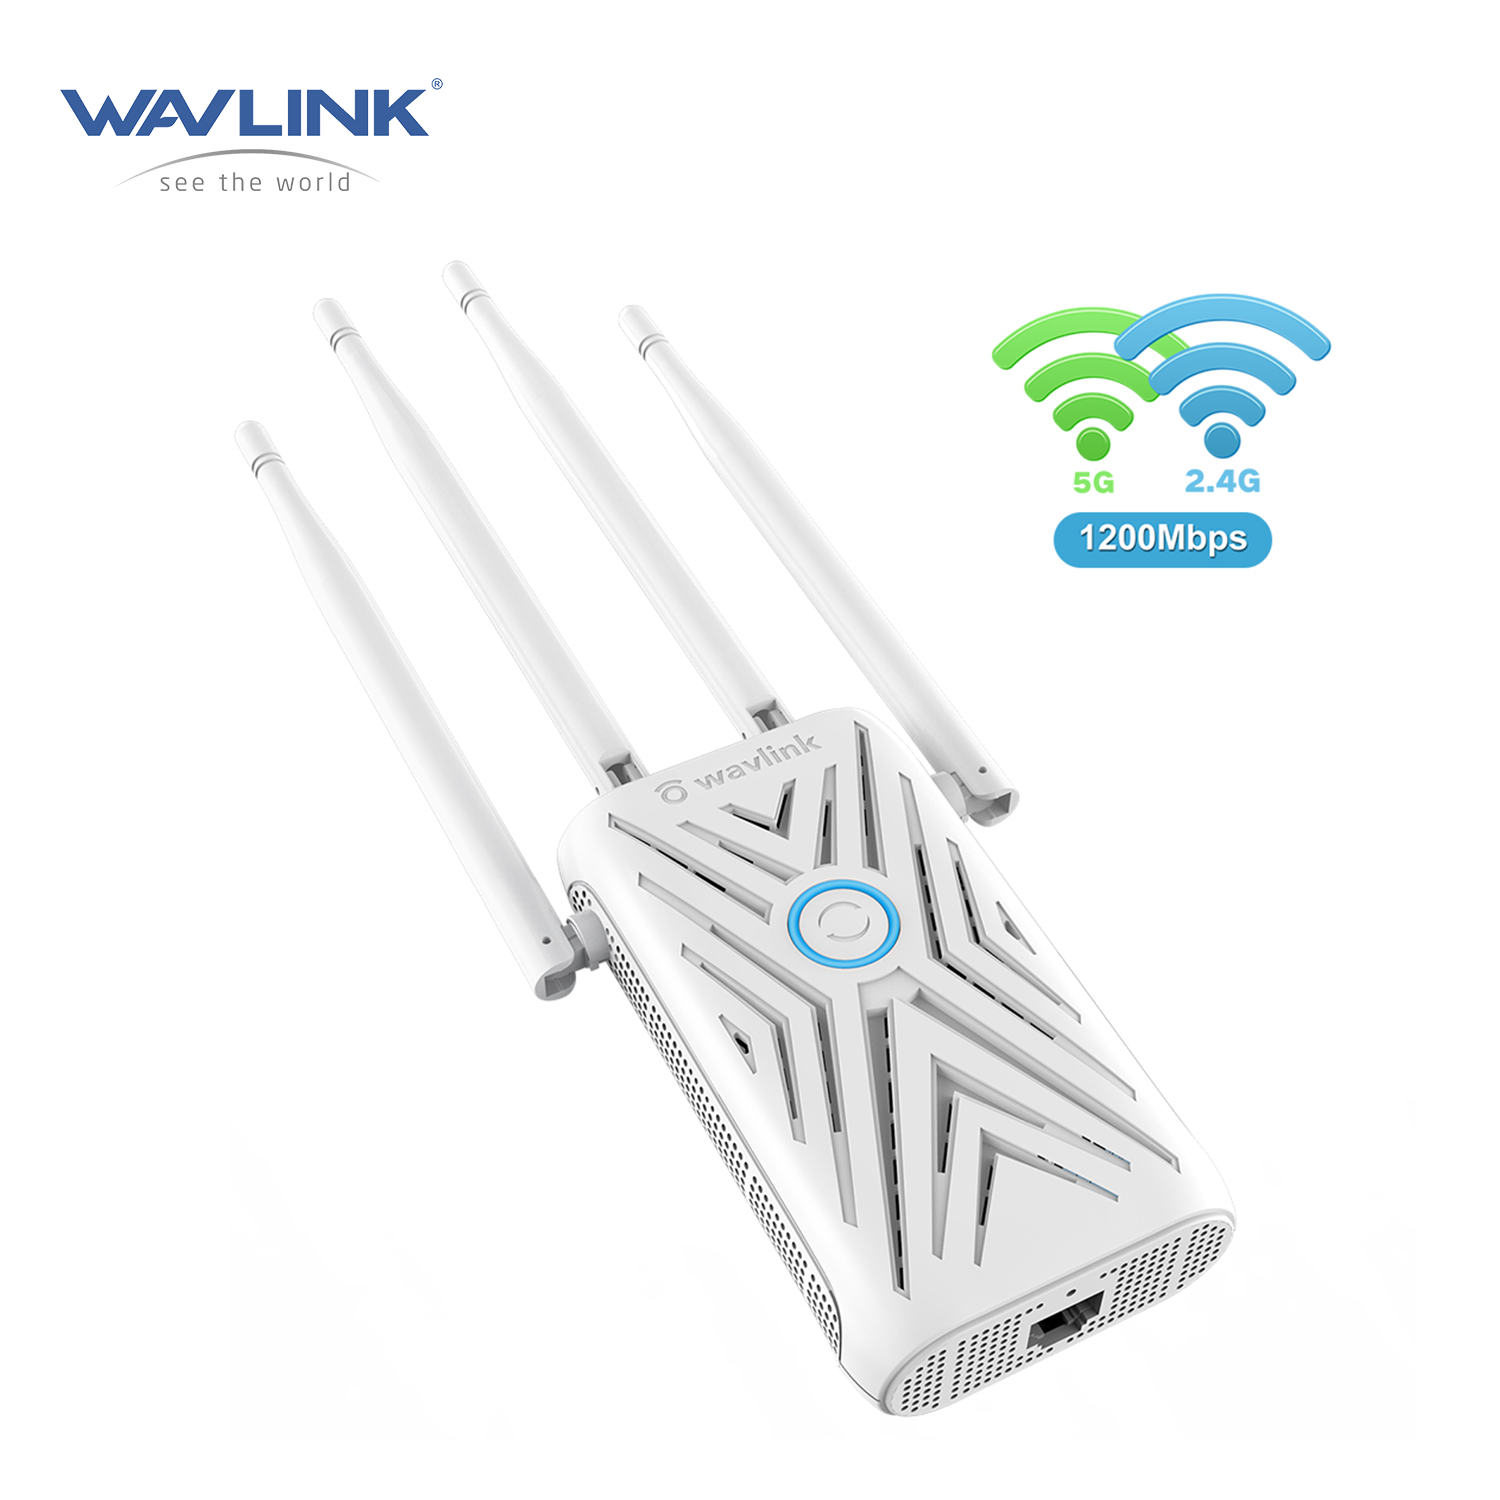 Wavlink AC1200 Dual Band WiFi Extender with 4 high gain antennas